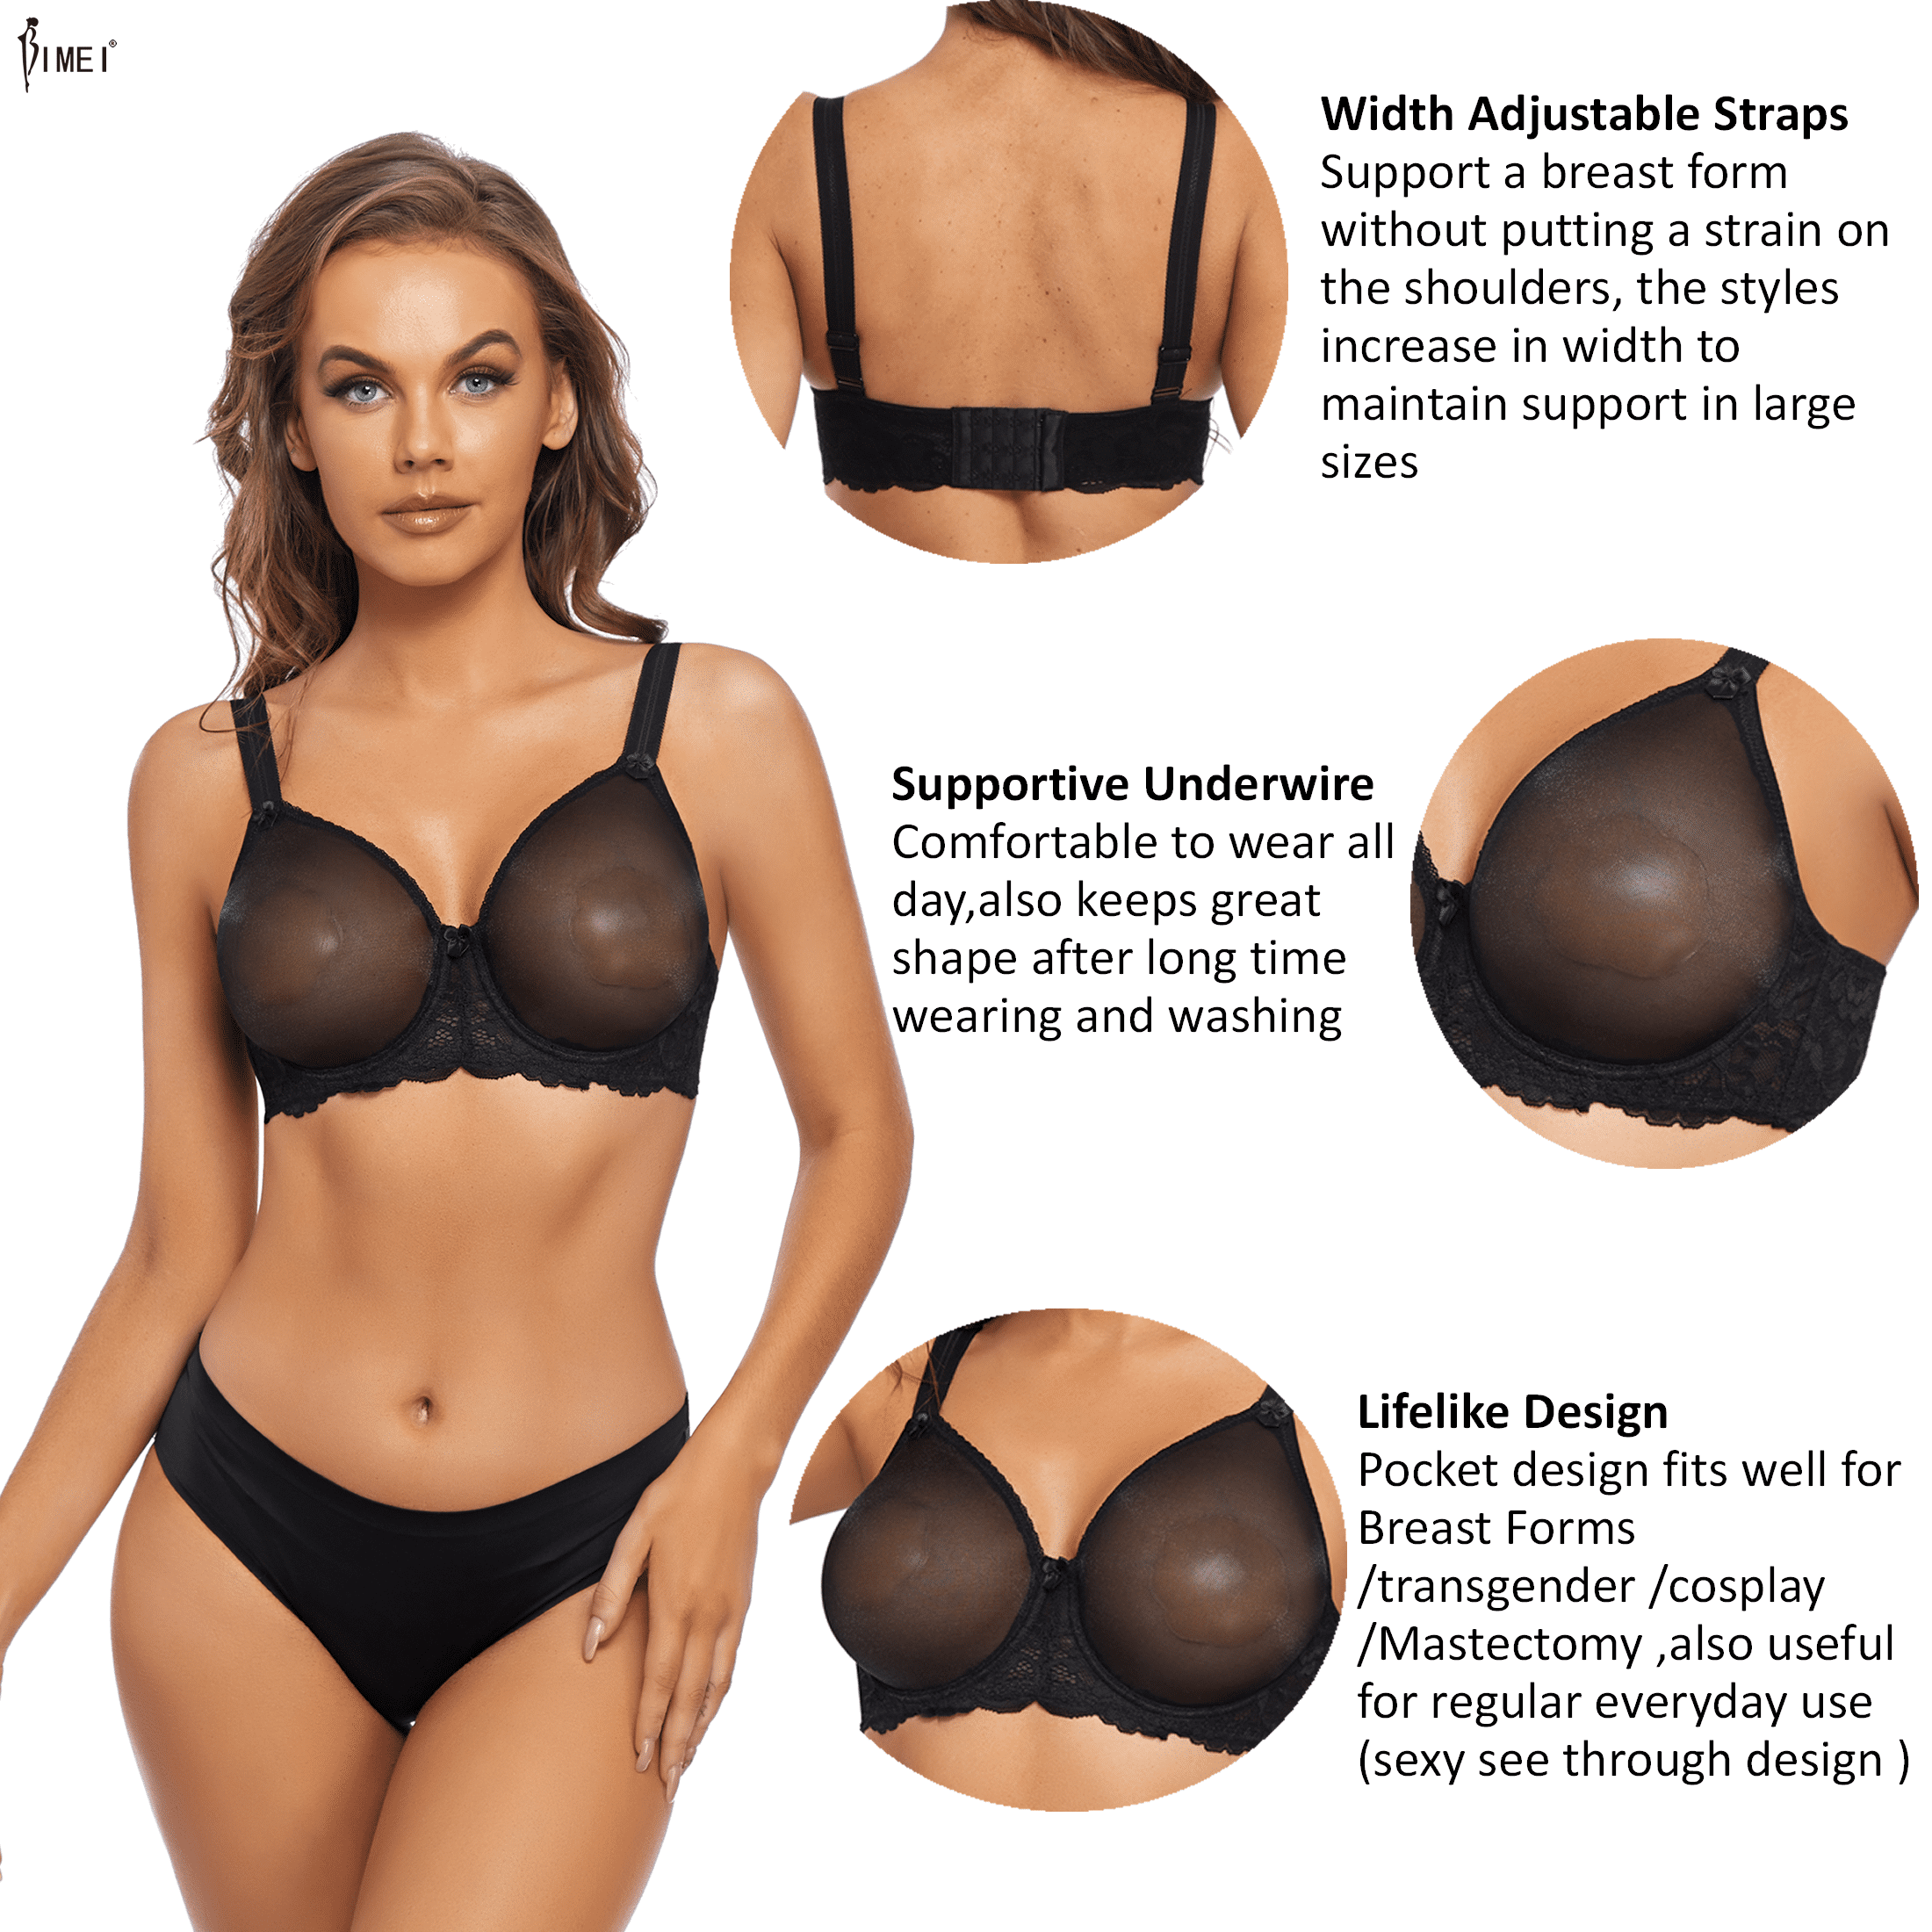 Triple D Breast Forms & Sheer Bra Set, Realistic Design